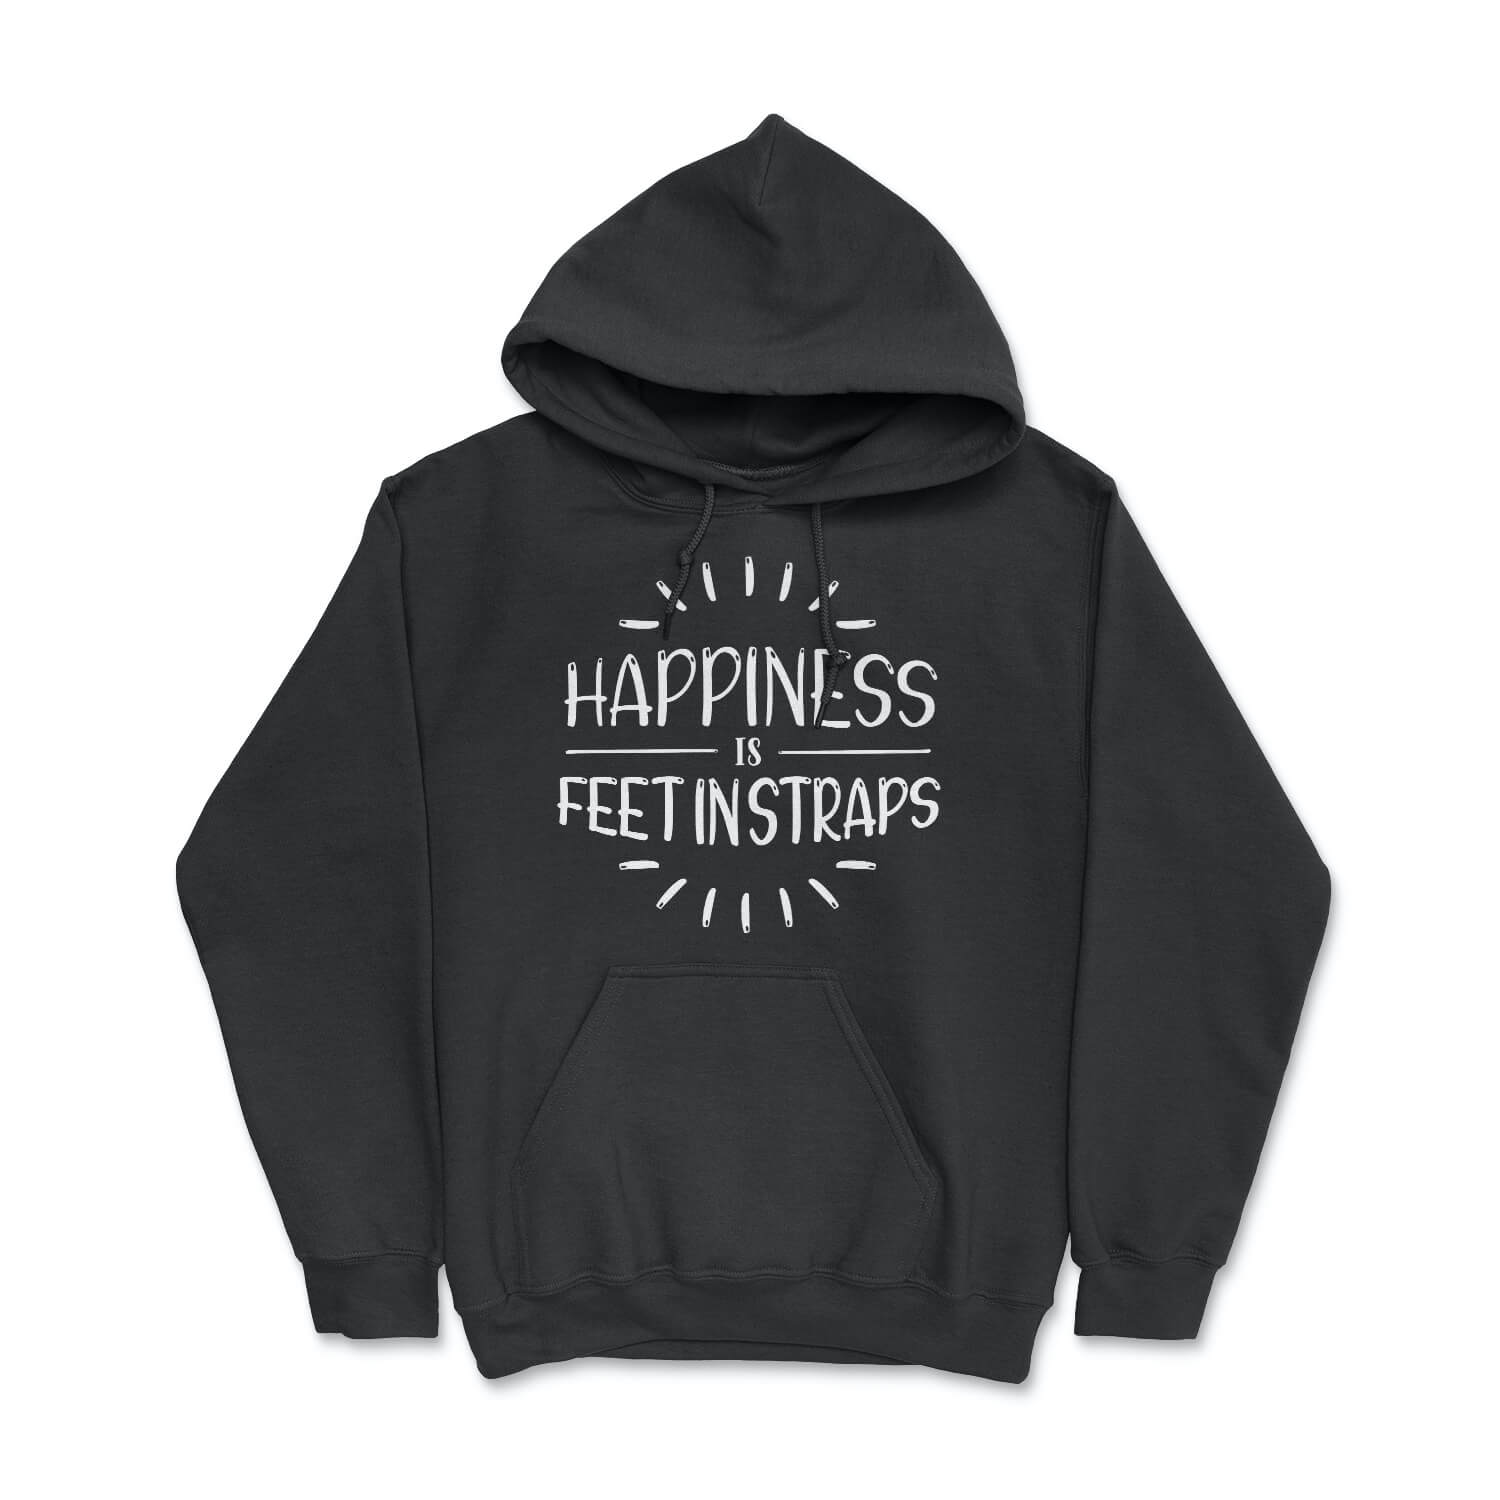 Happiness is Feet in Straps - Cozy Hooded Sweatshirt Skyba Hoodie